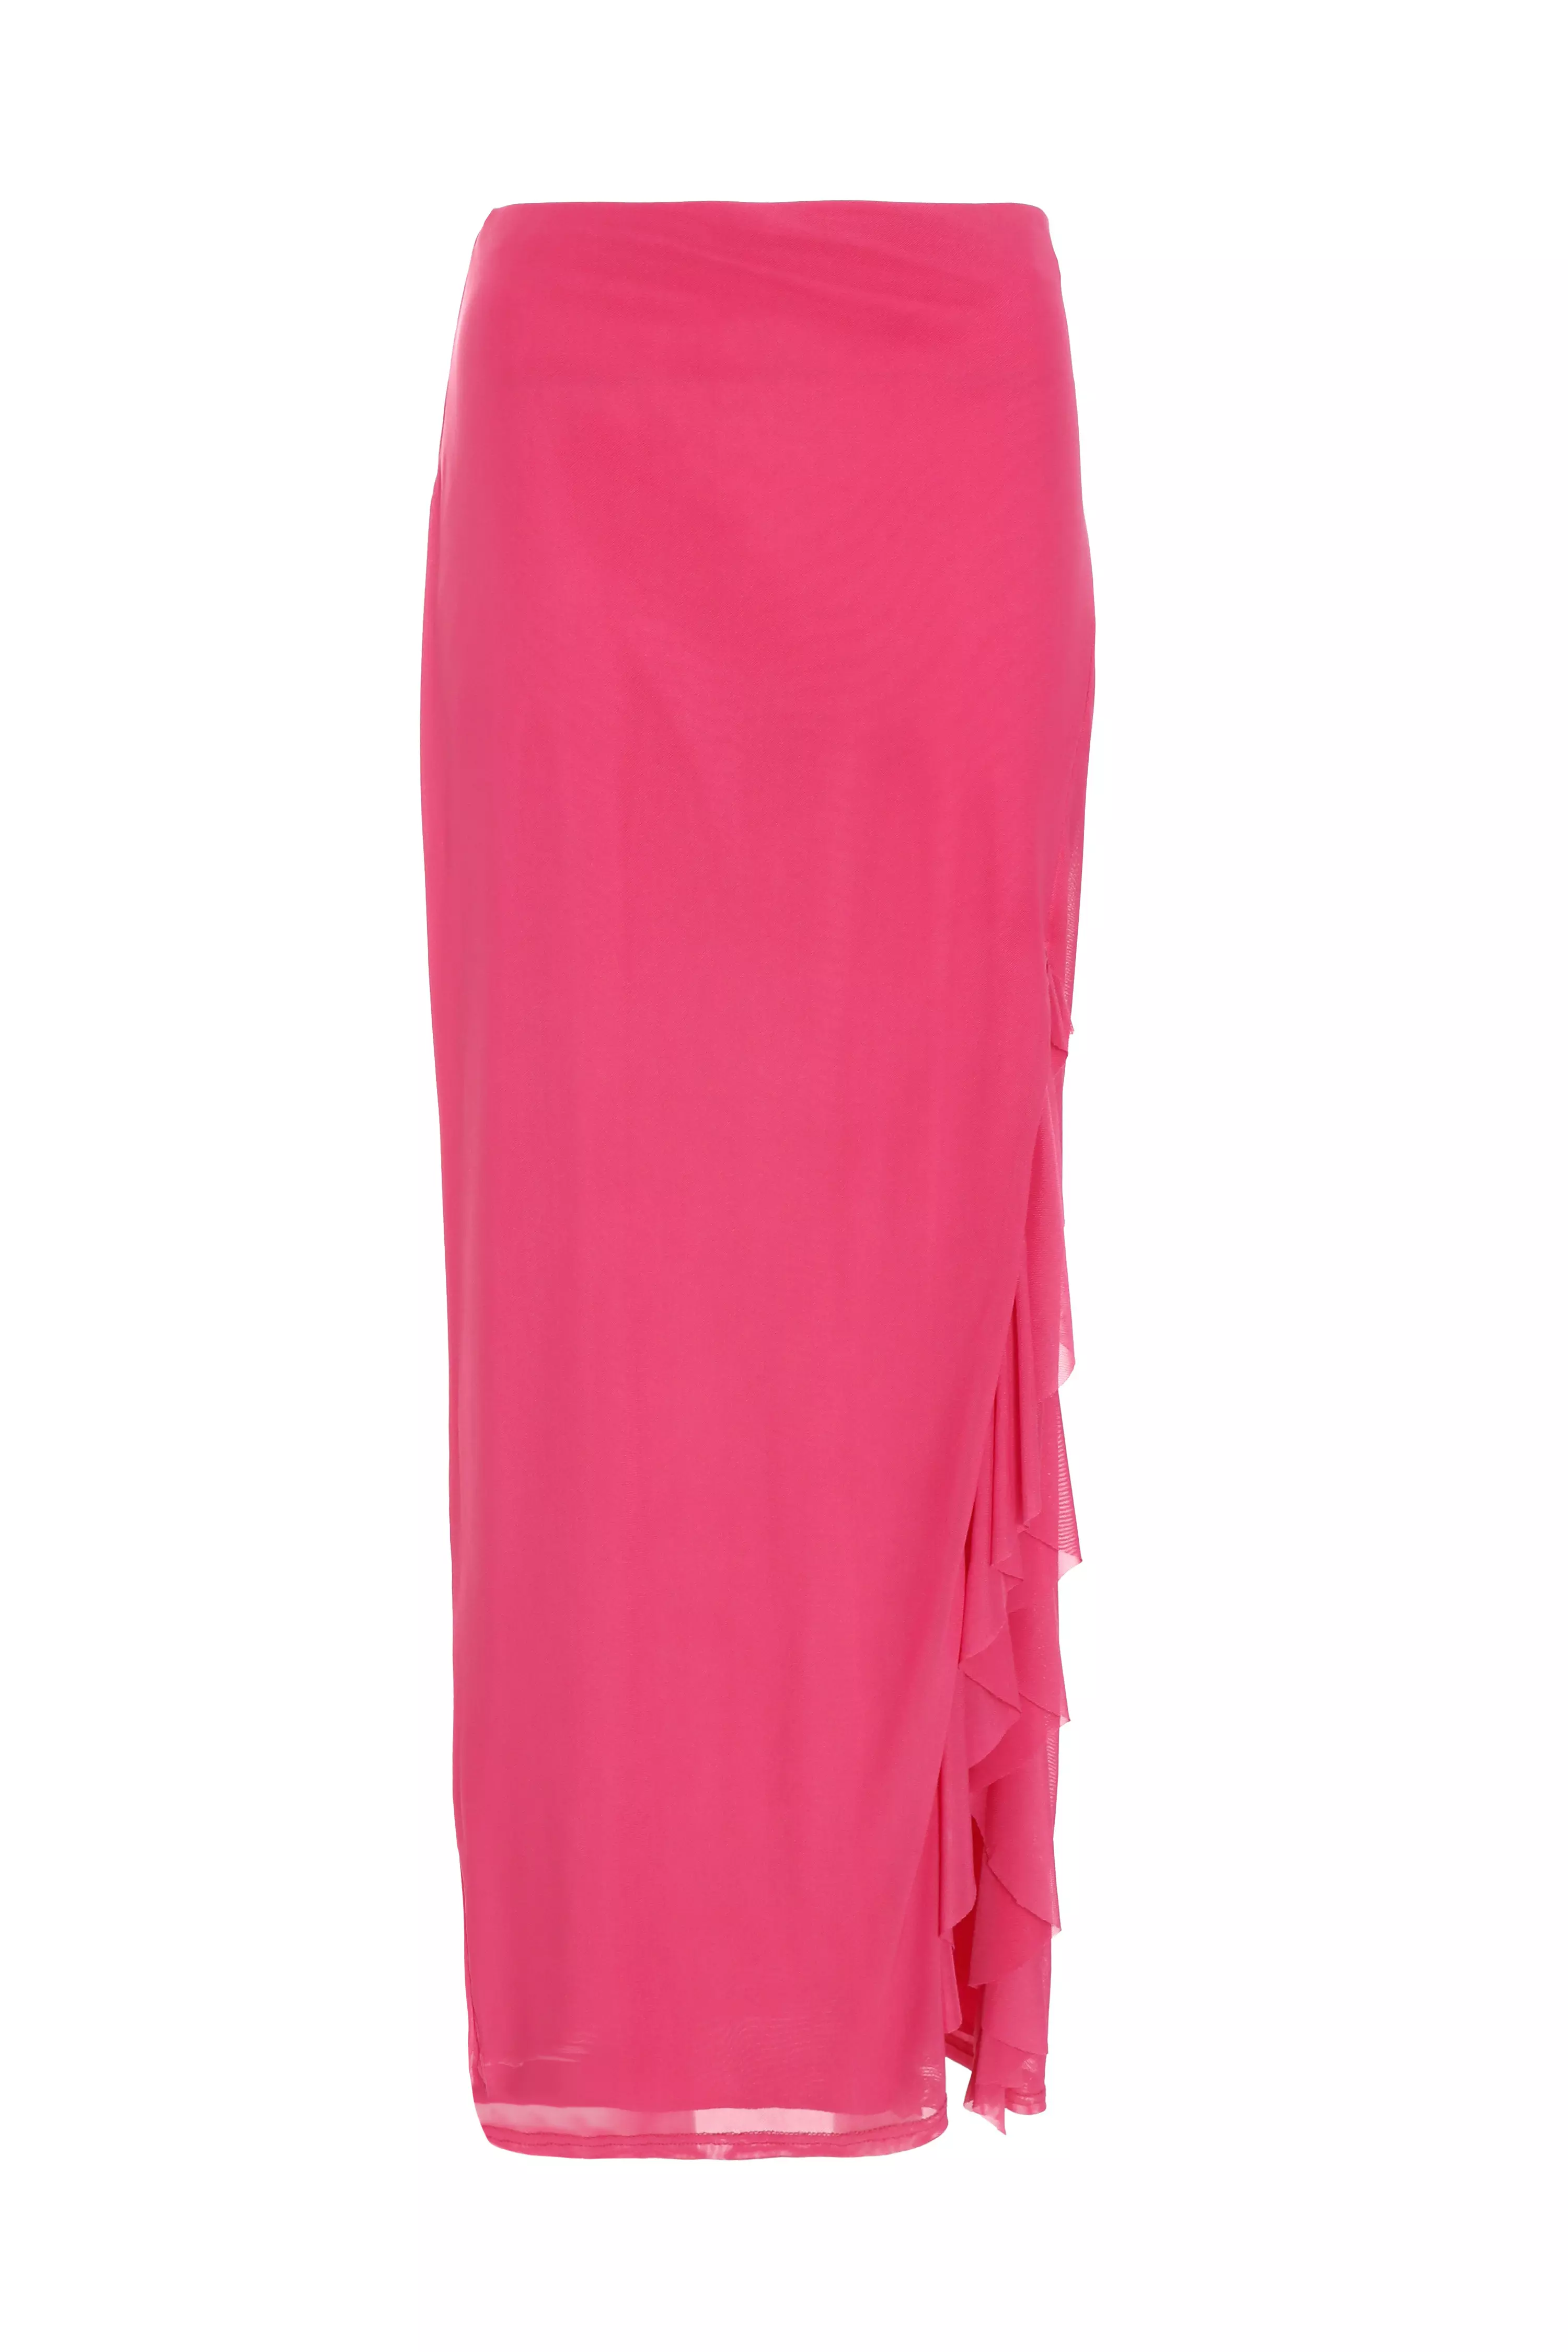 Pink Frill Maxi Skirt - QUIZ Clothing